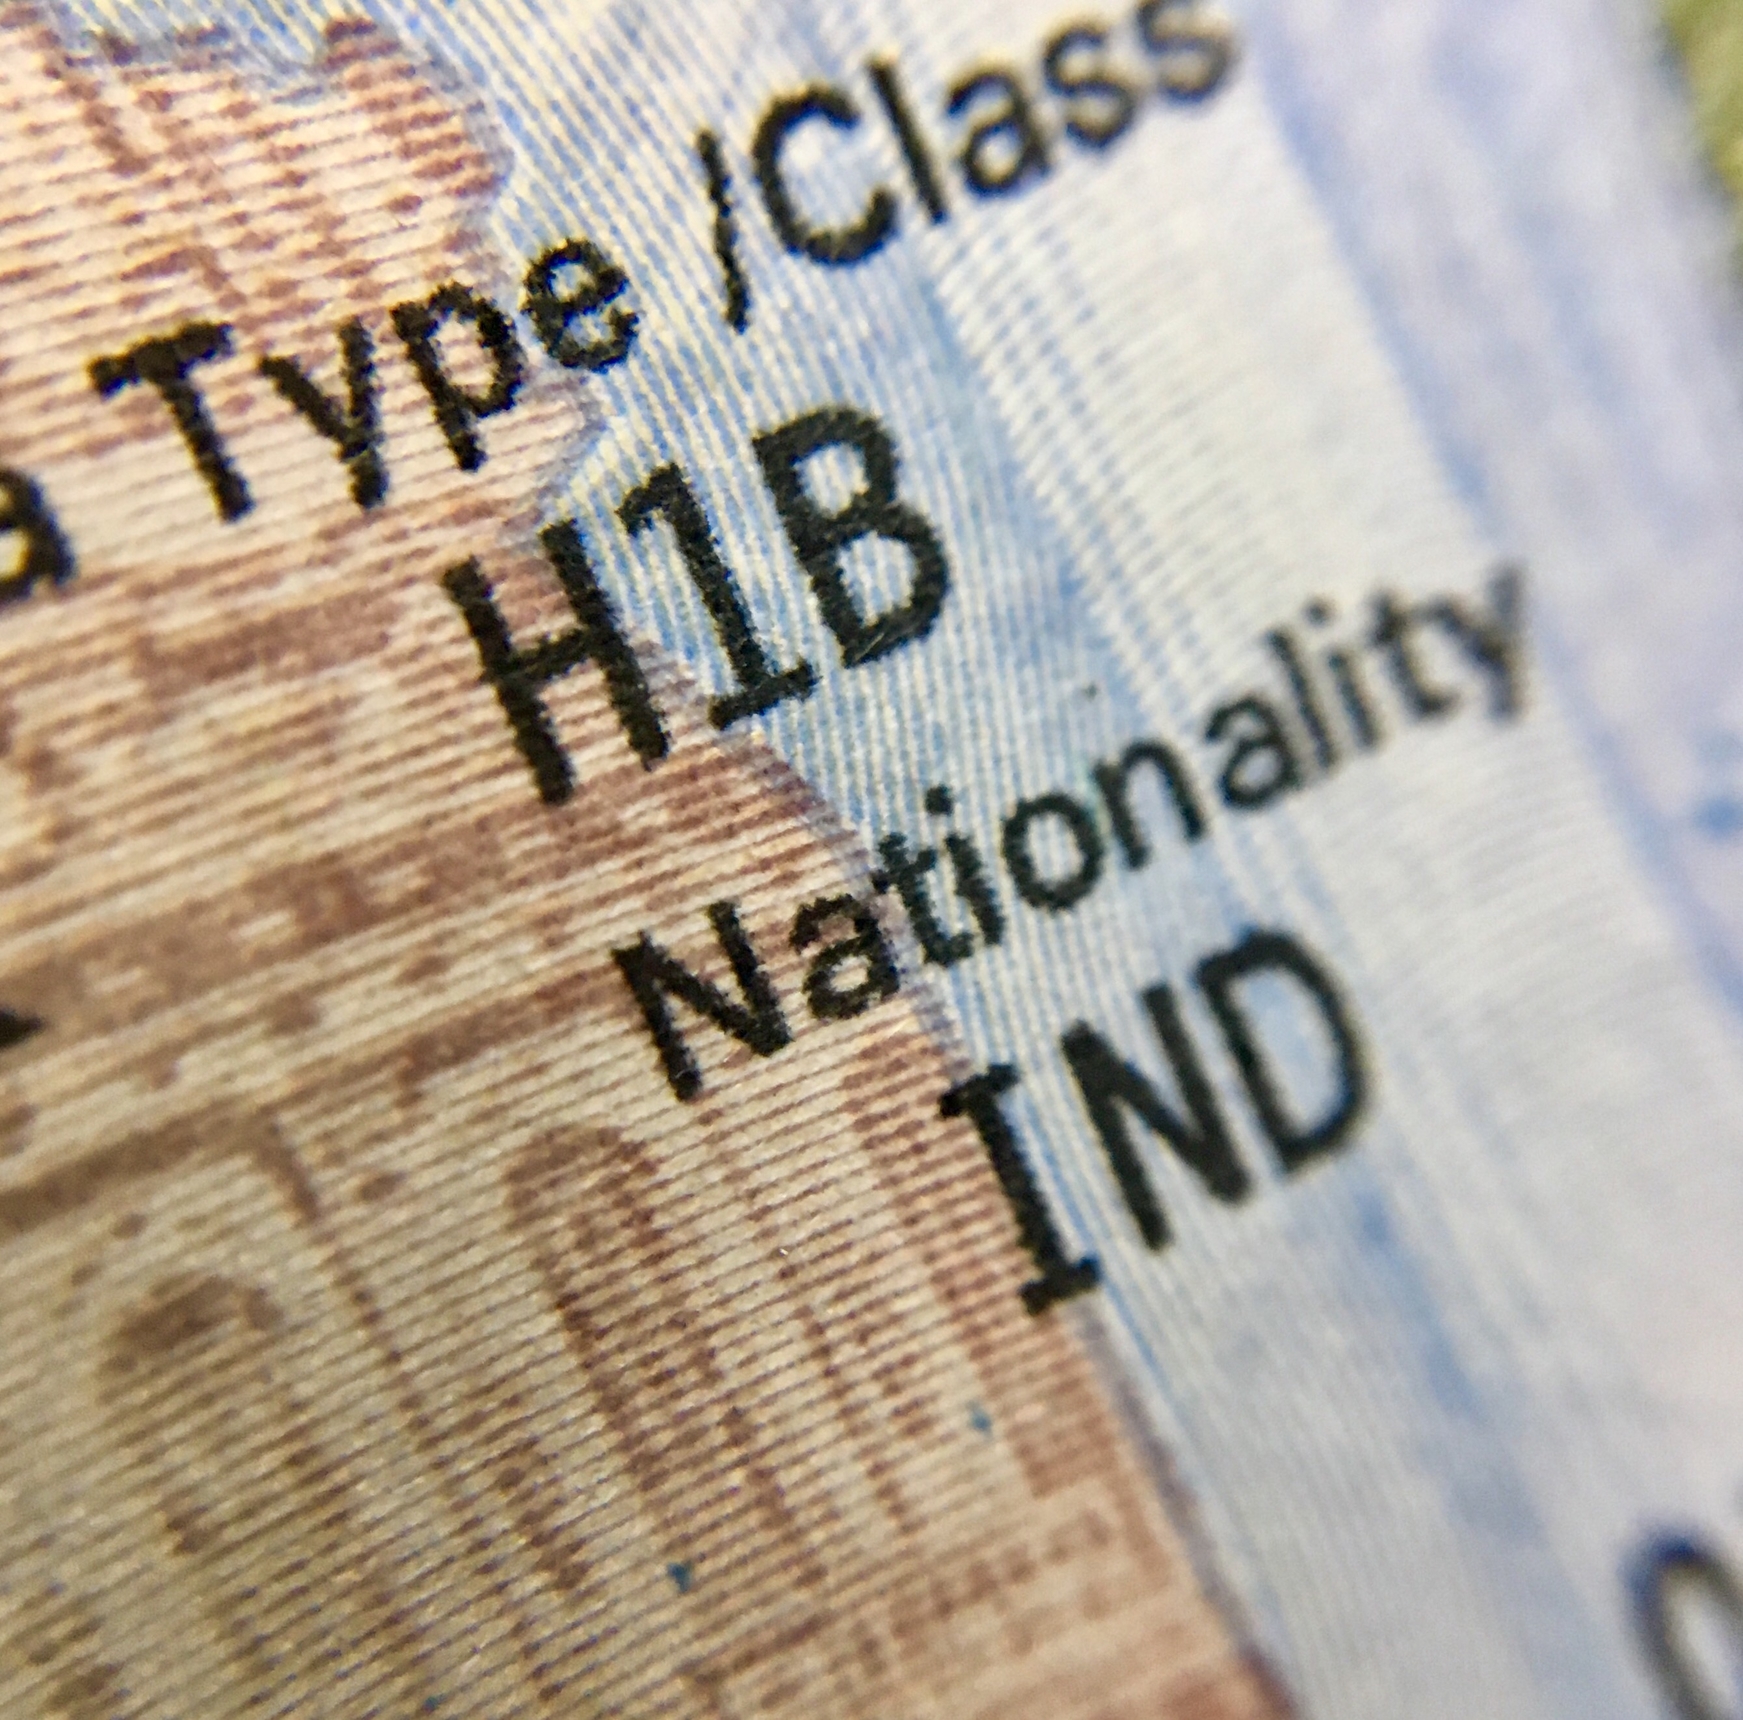 IT Company Fined $48,193 for H-1B Visa Program Violations